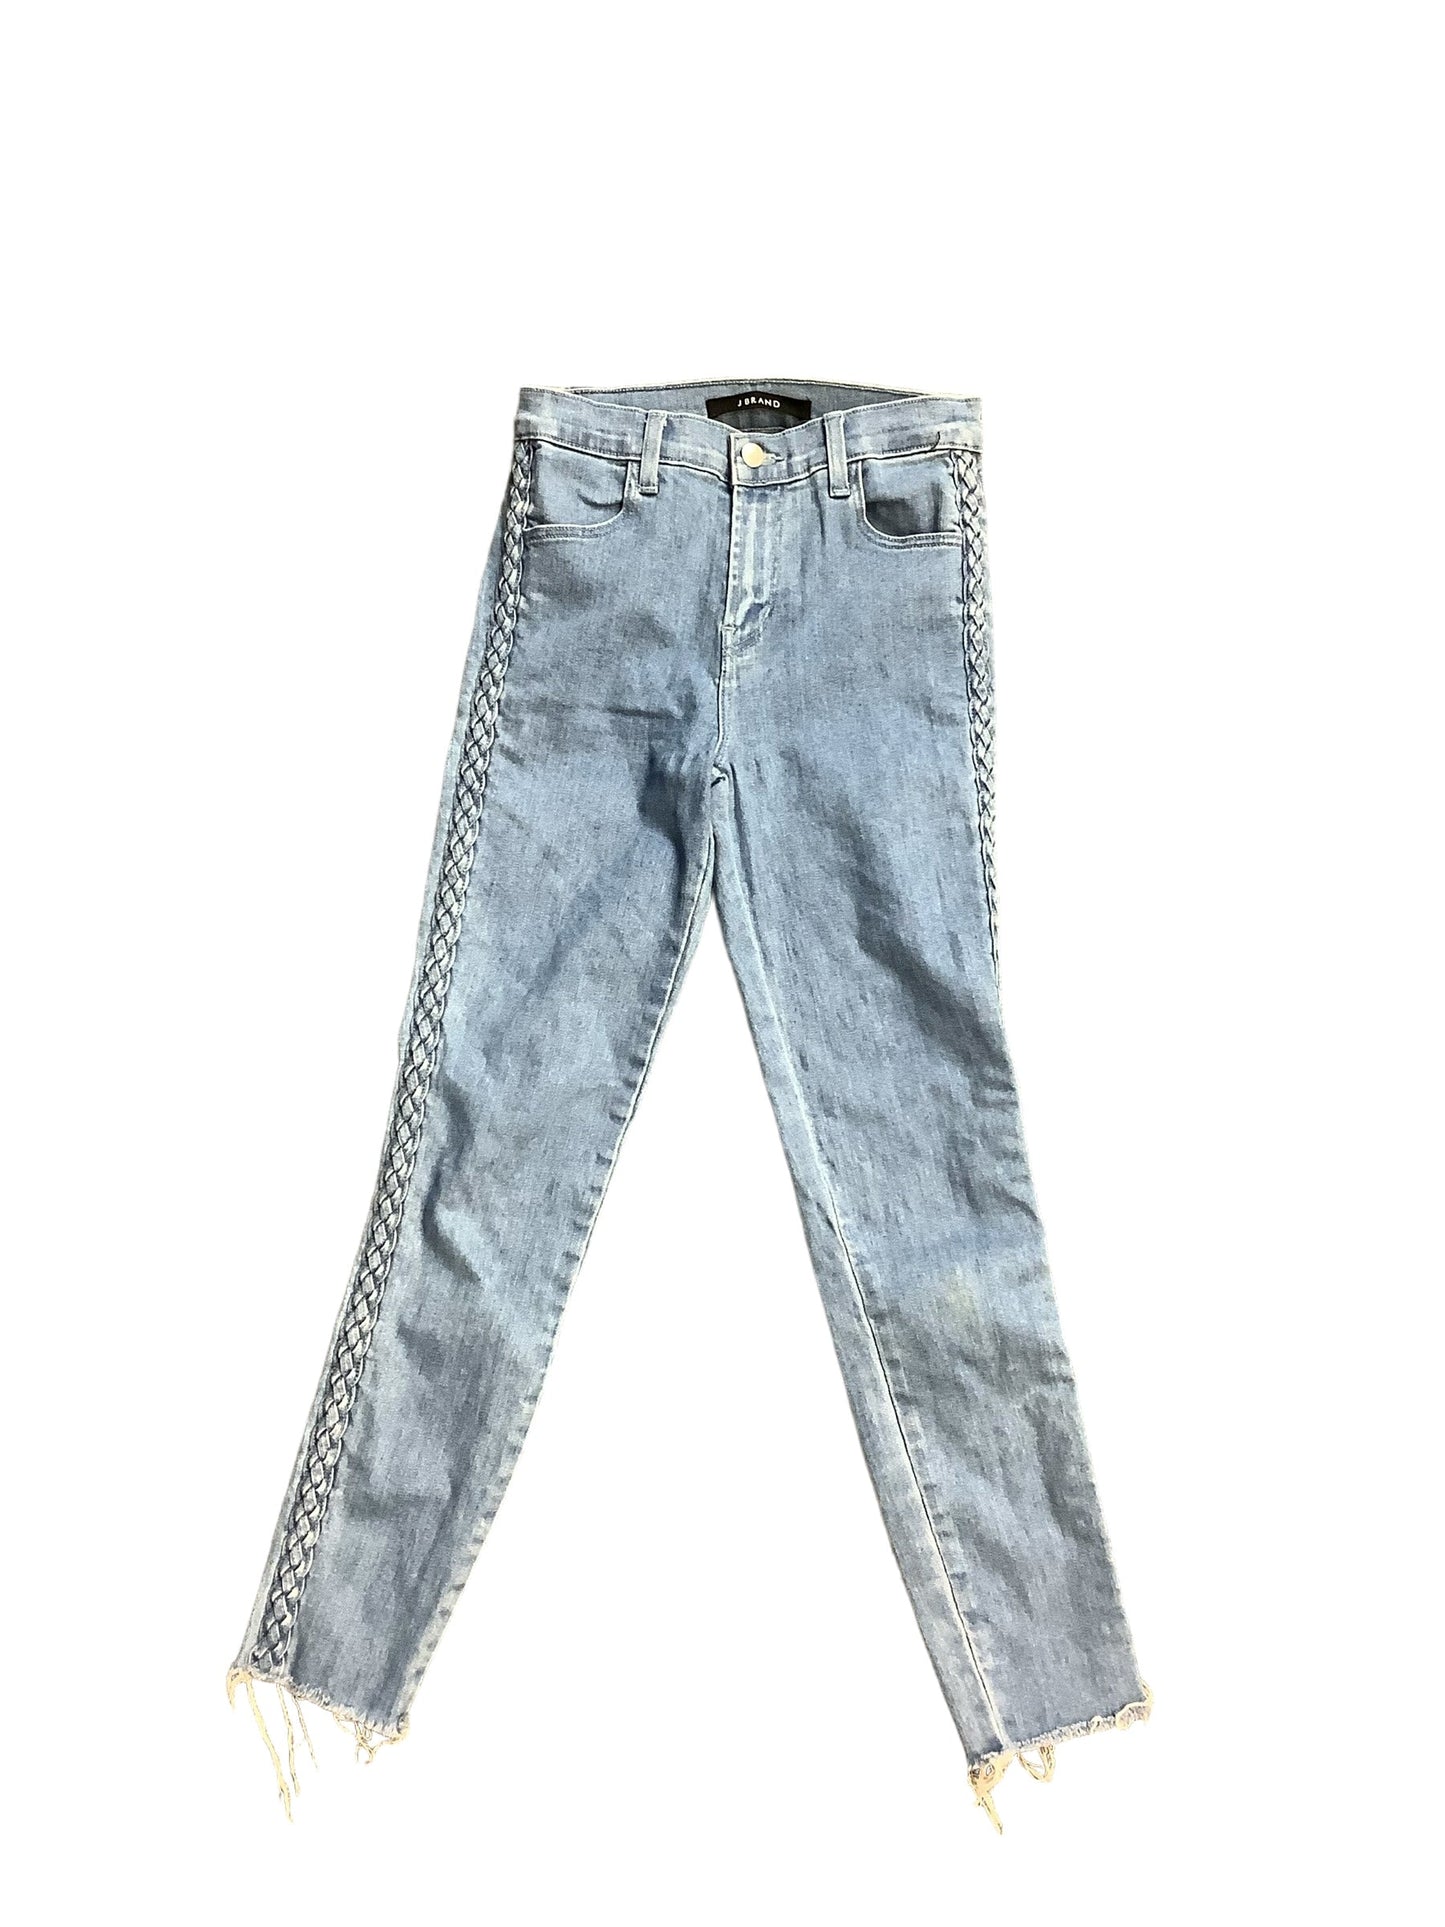 Blue Denim Jeans Skinny J Brand, Size 0